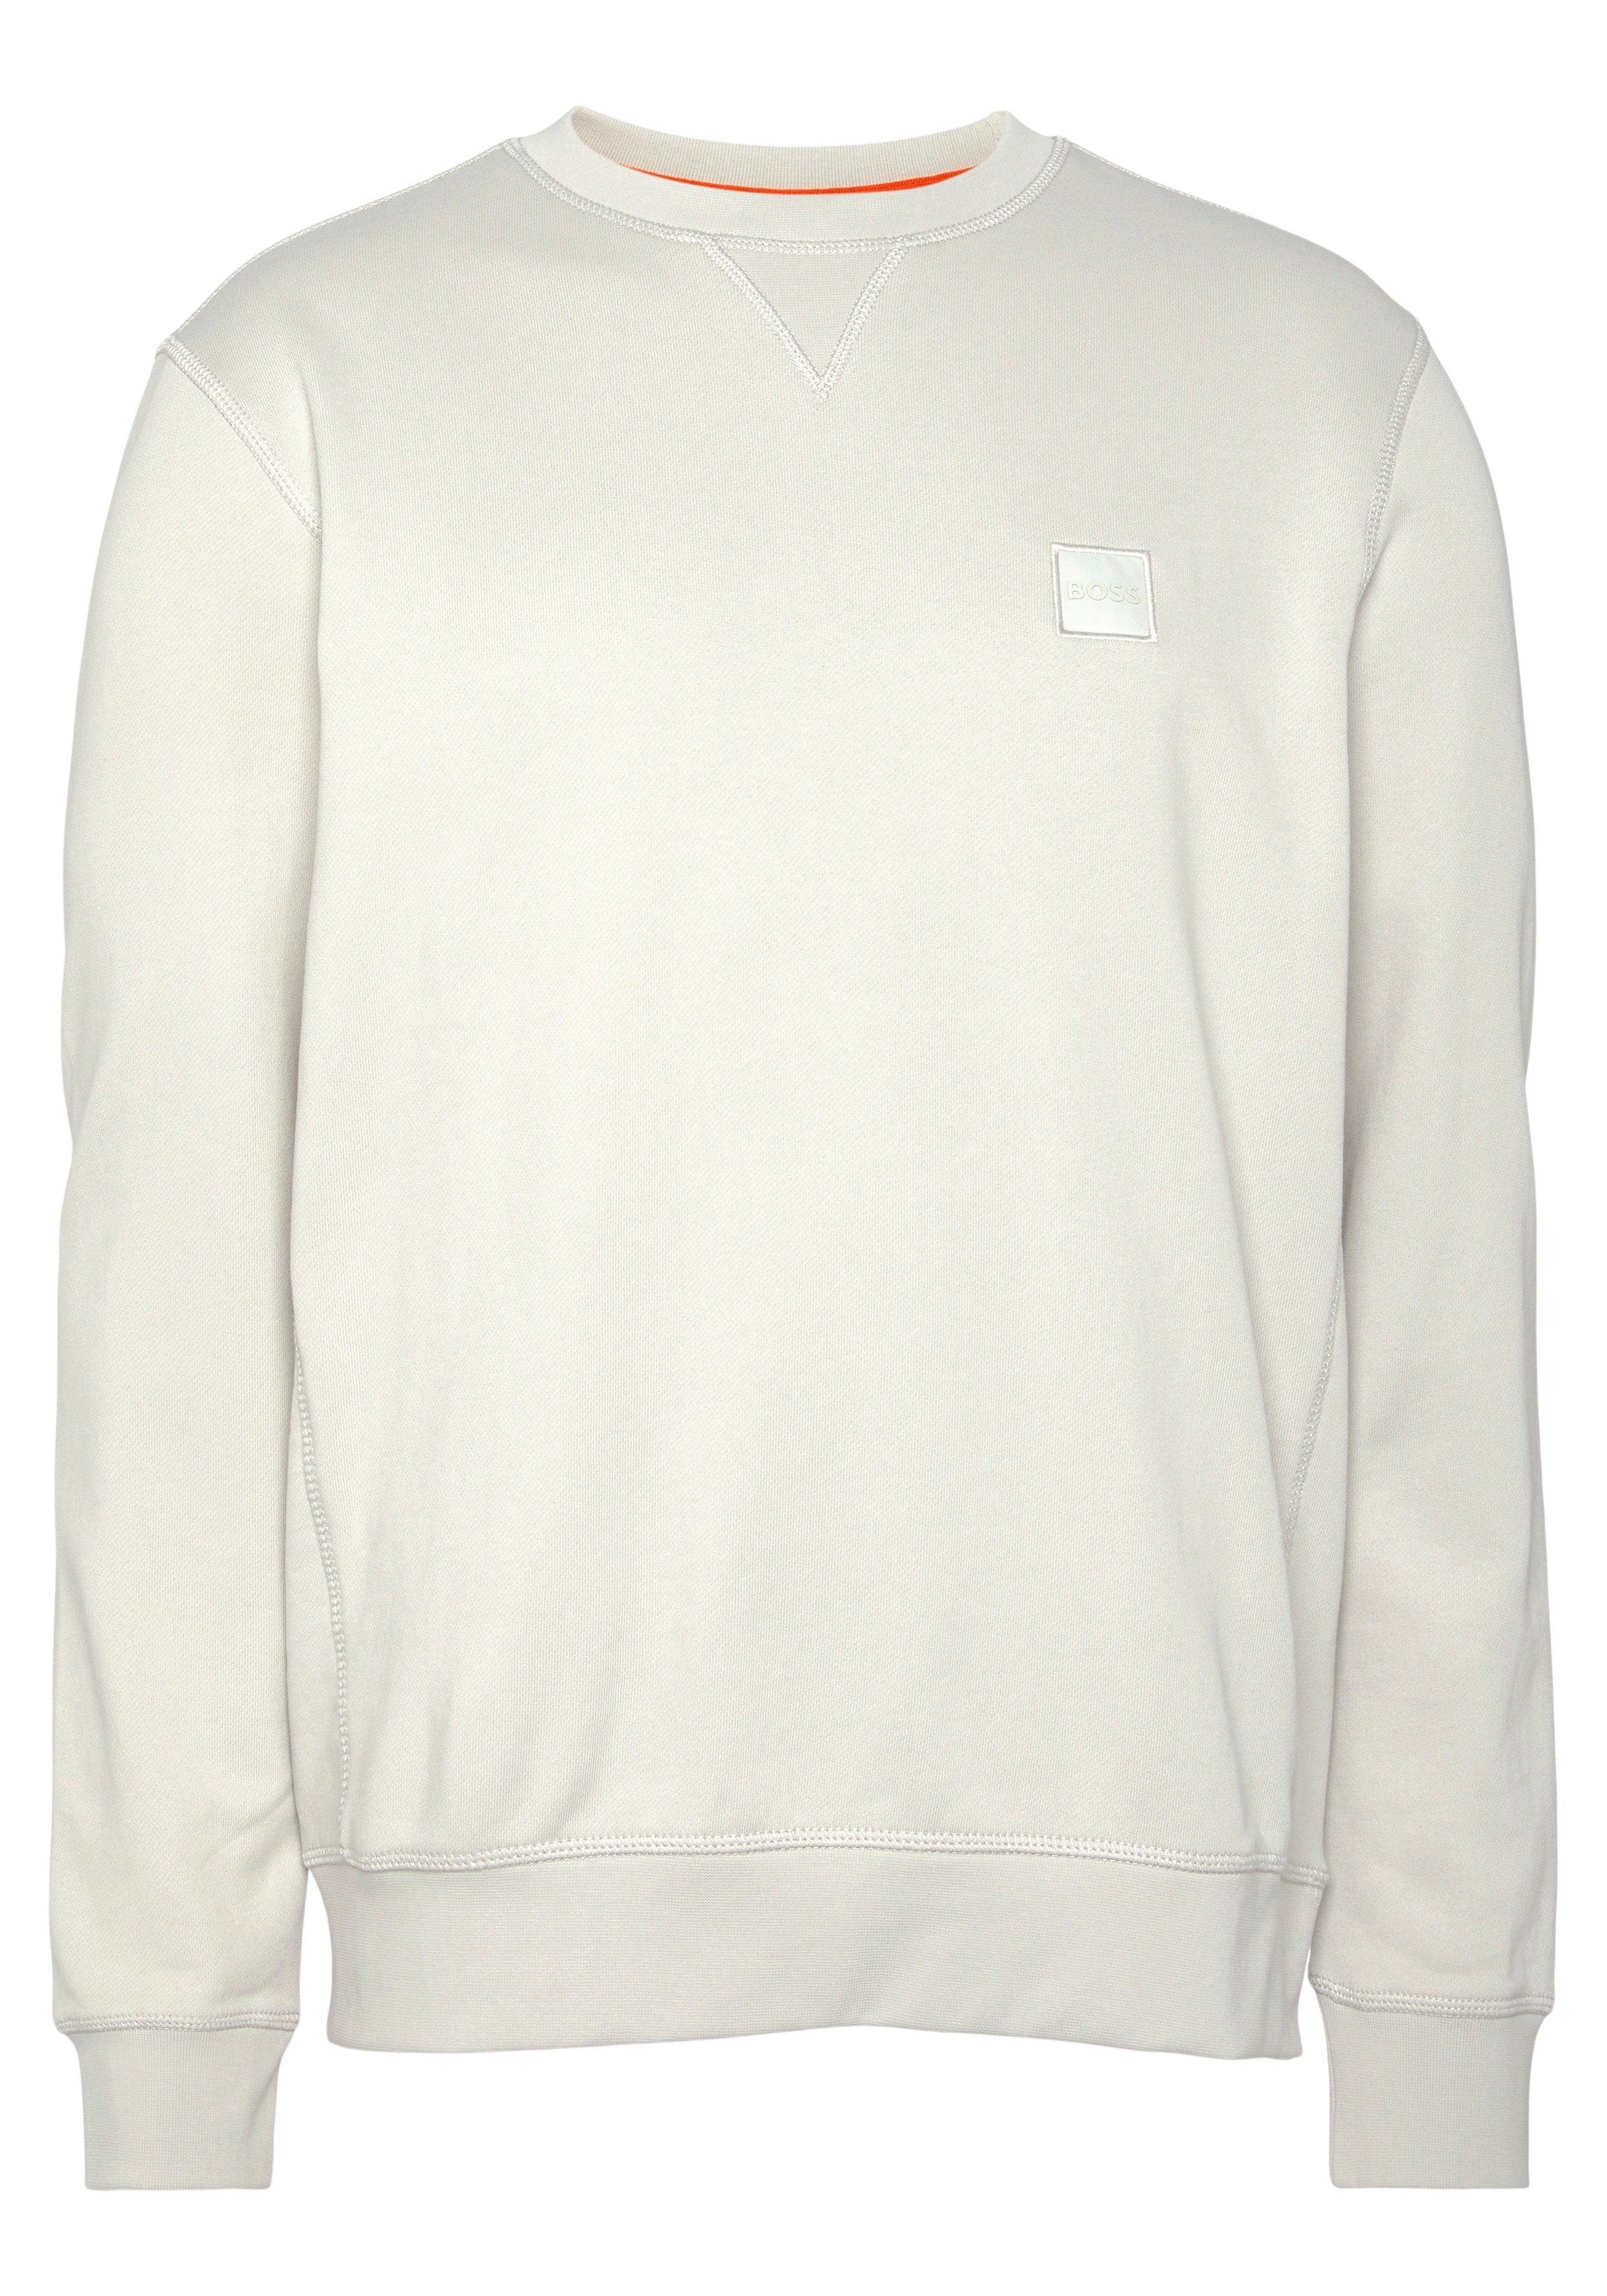 BOSS ORANGE Sweatshirt Westart mit aufgesticktem BOSS Logo Light/Pastel Grey057